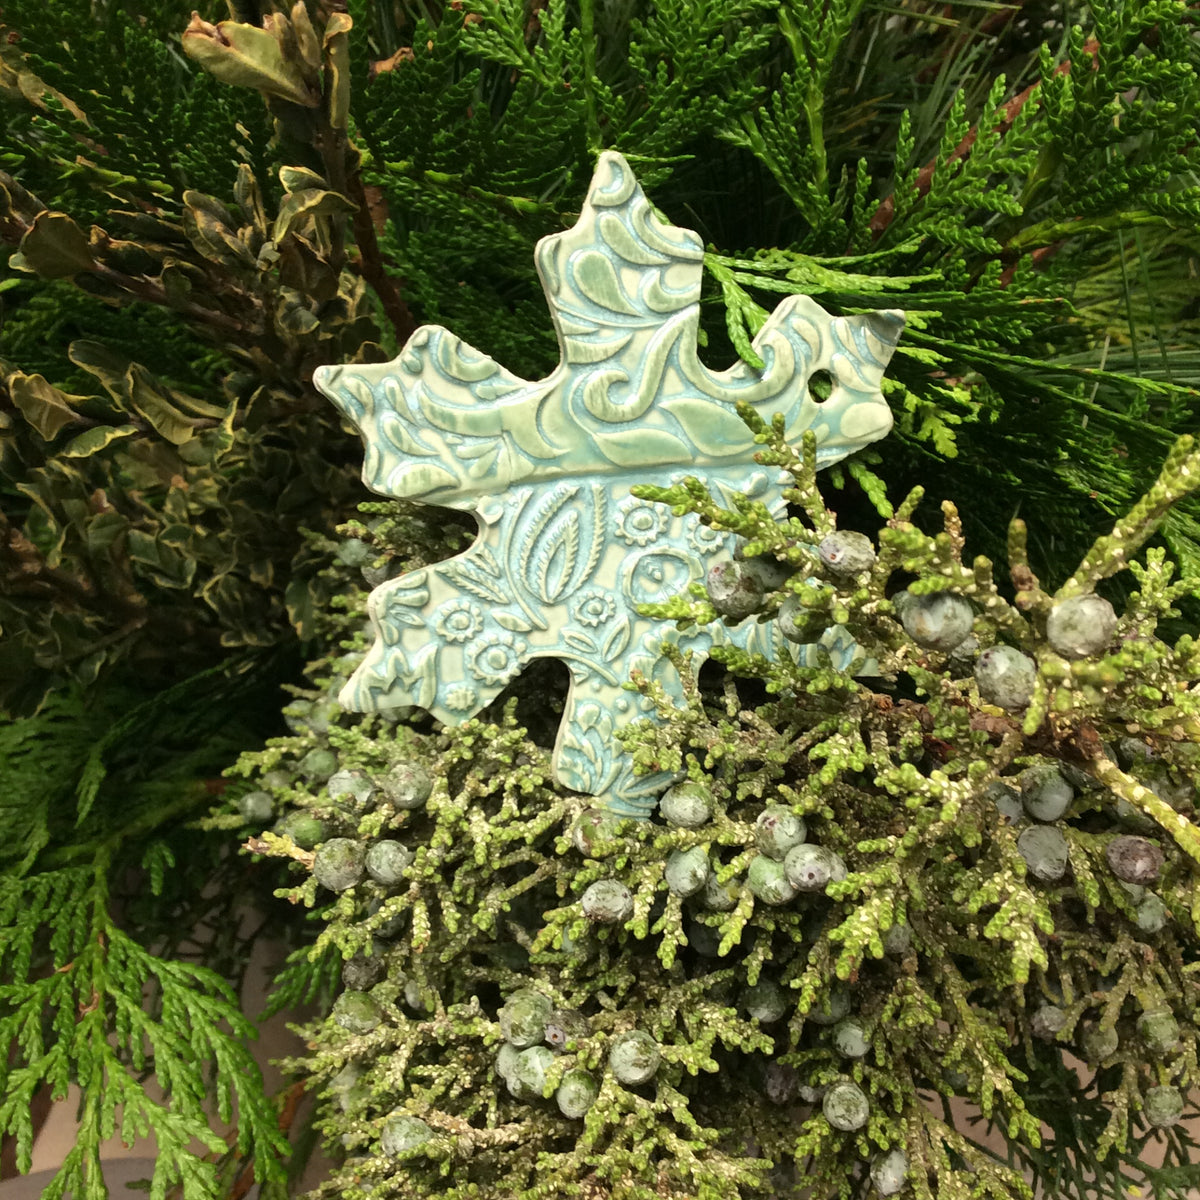 Handmade Ceramic Snowflake Ornaments